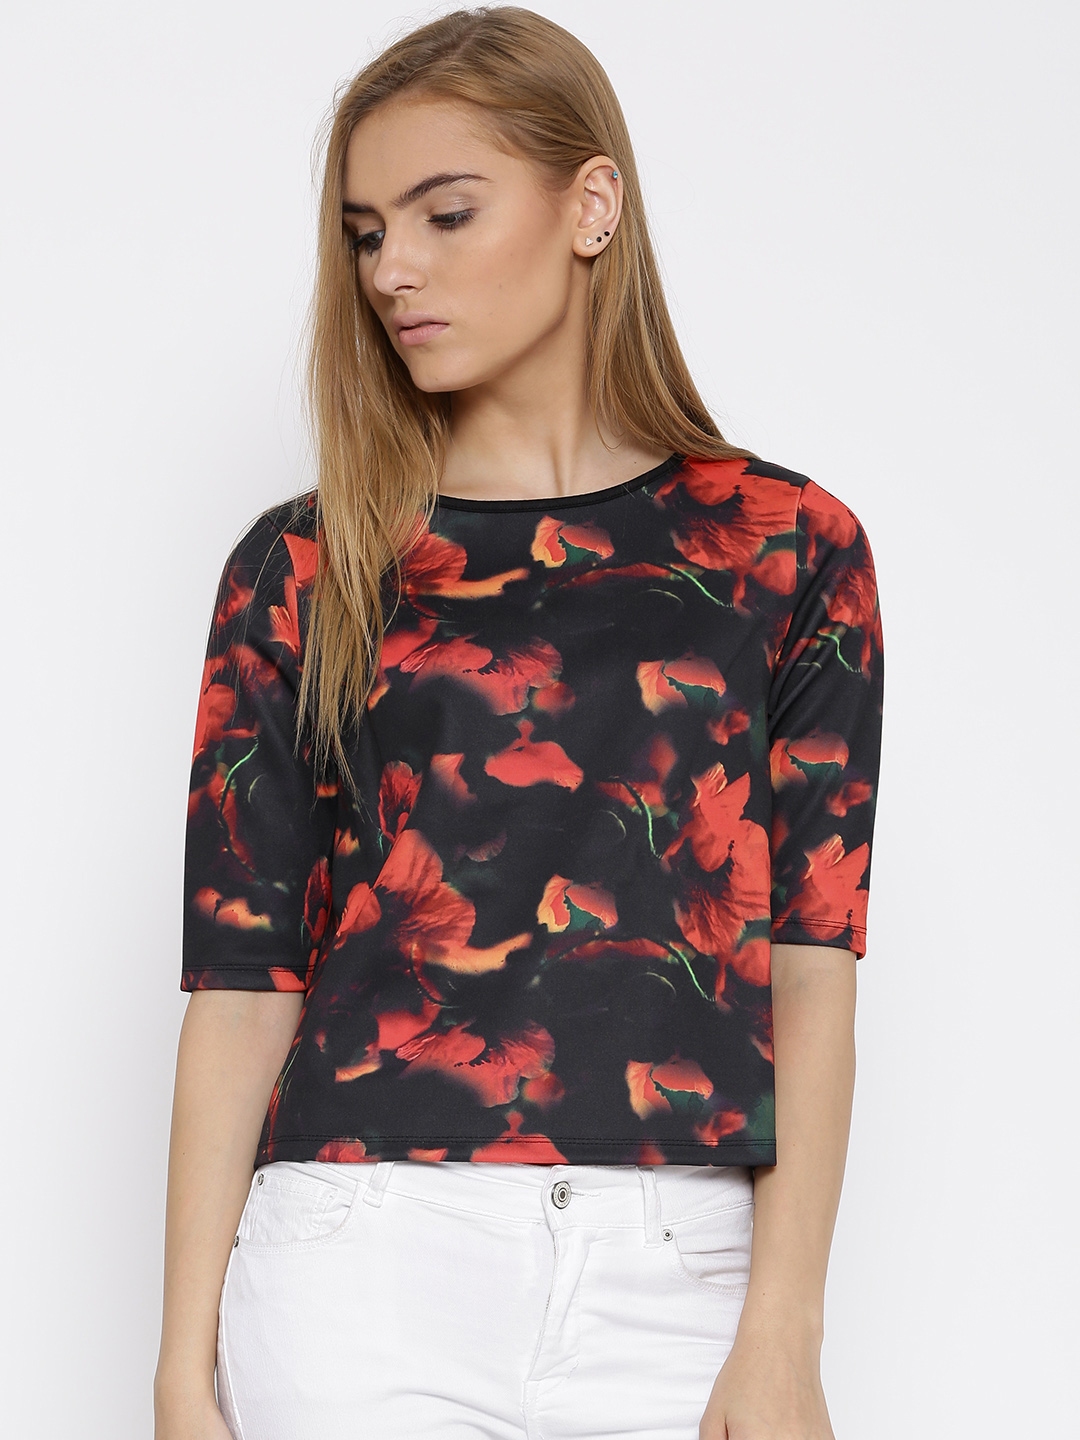 Buy Vero Moda Black & Red Floral Print Top - Tops for Women 1389399 ...